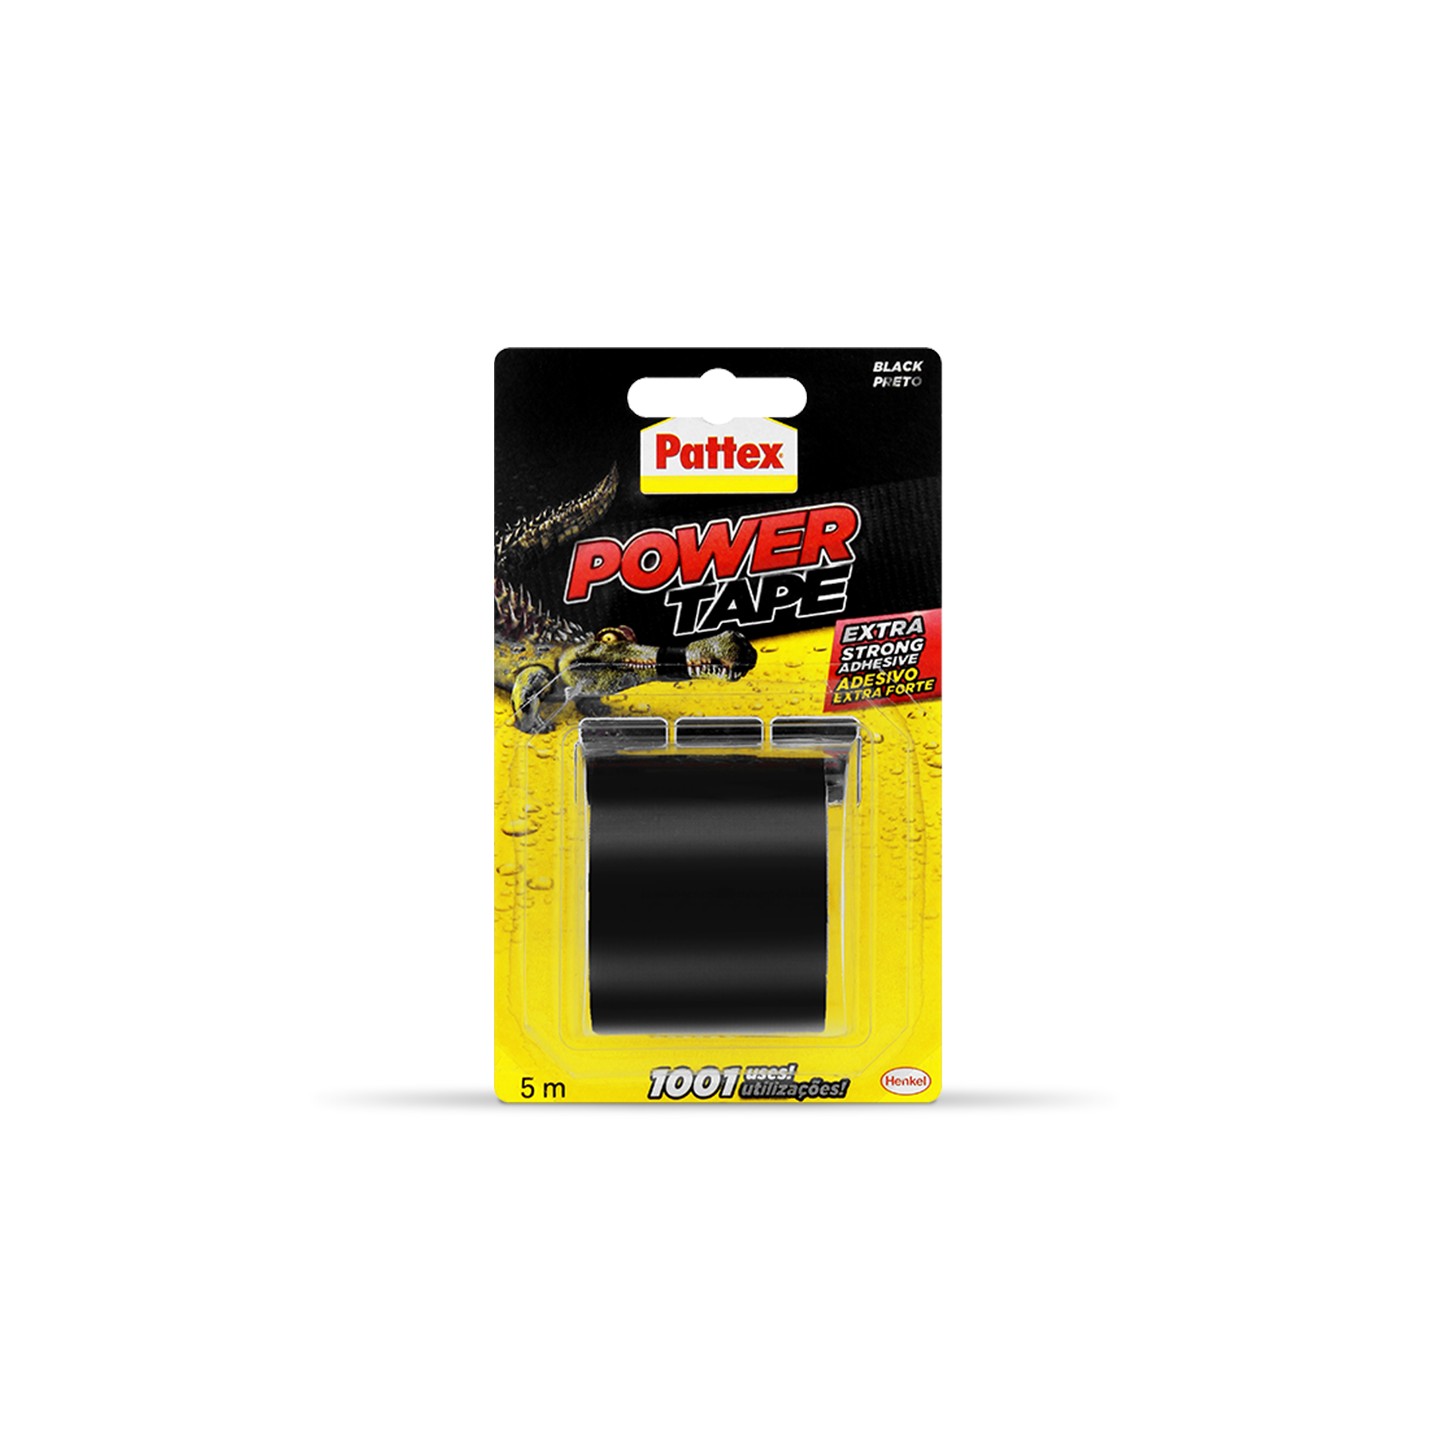 Pattex Power 50 mm x 10 m Duct Tape Black